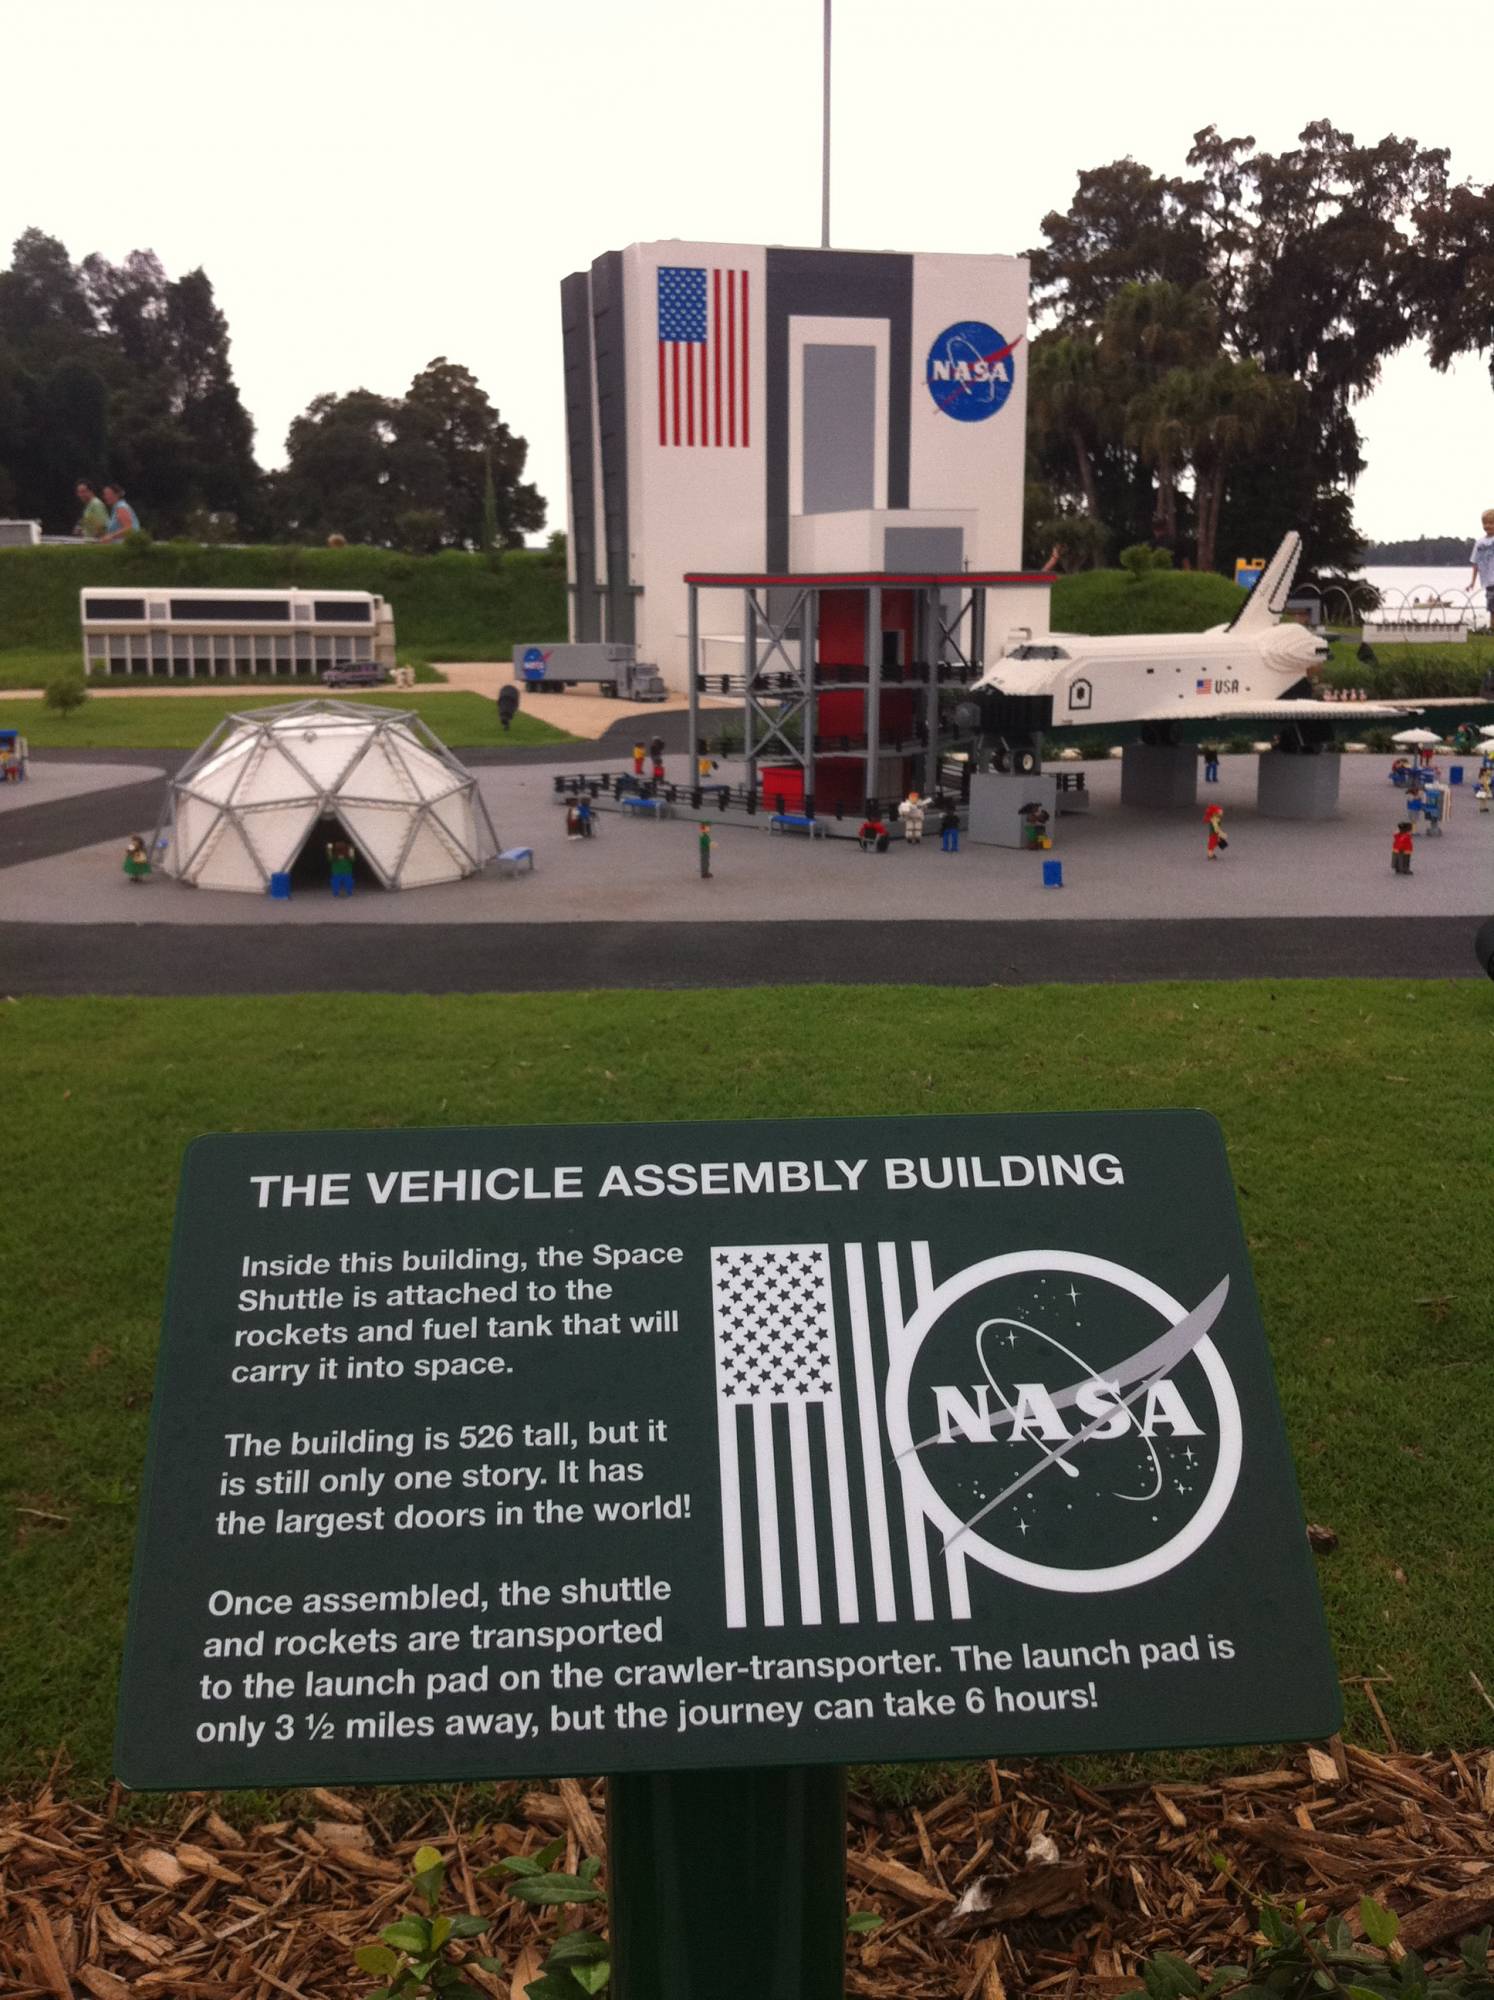 Vehicle Assembly Building at LEGOLAND Florida